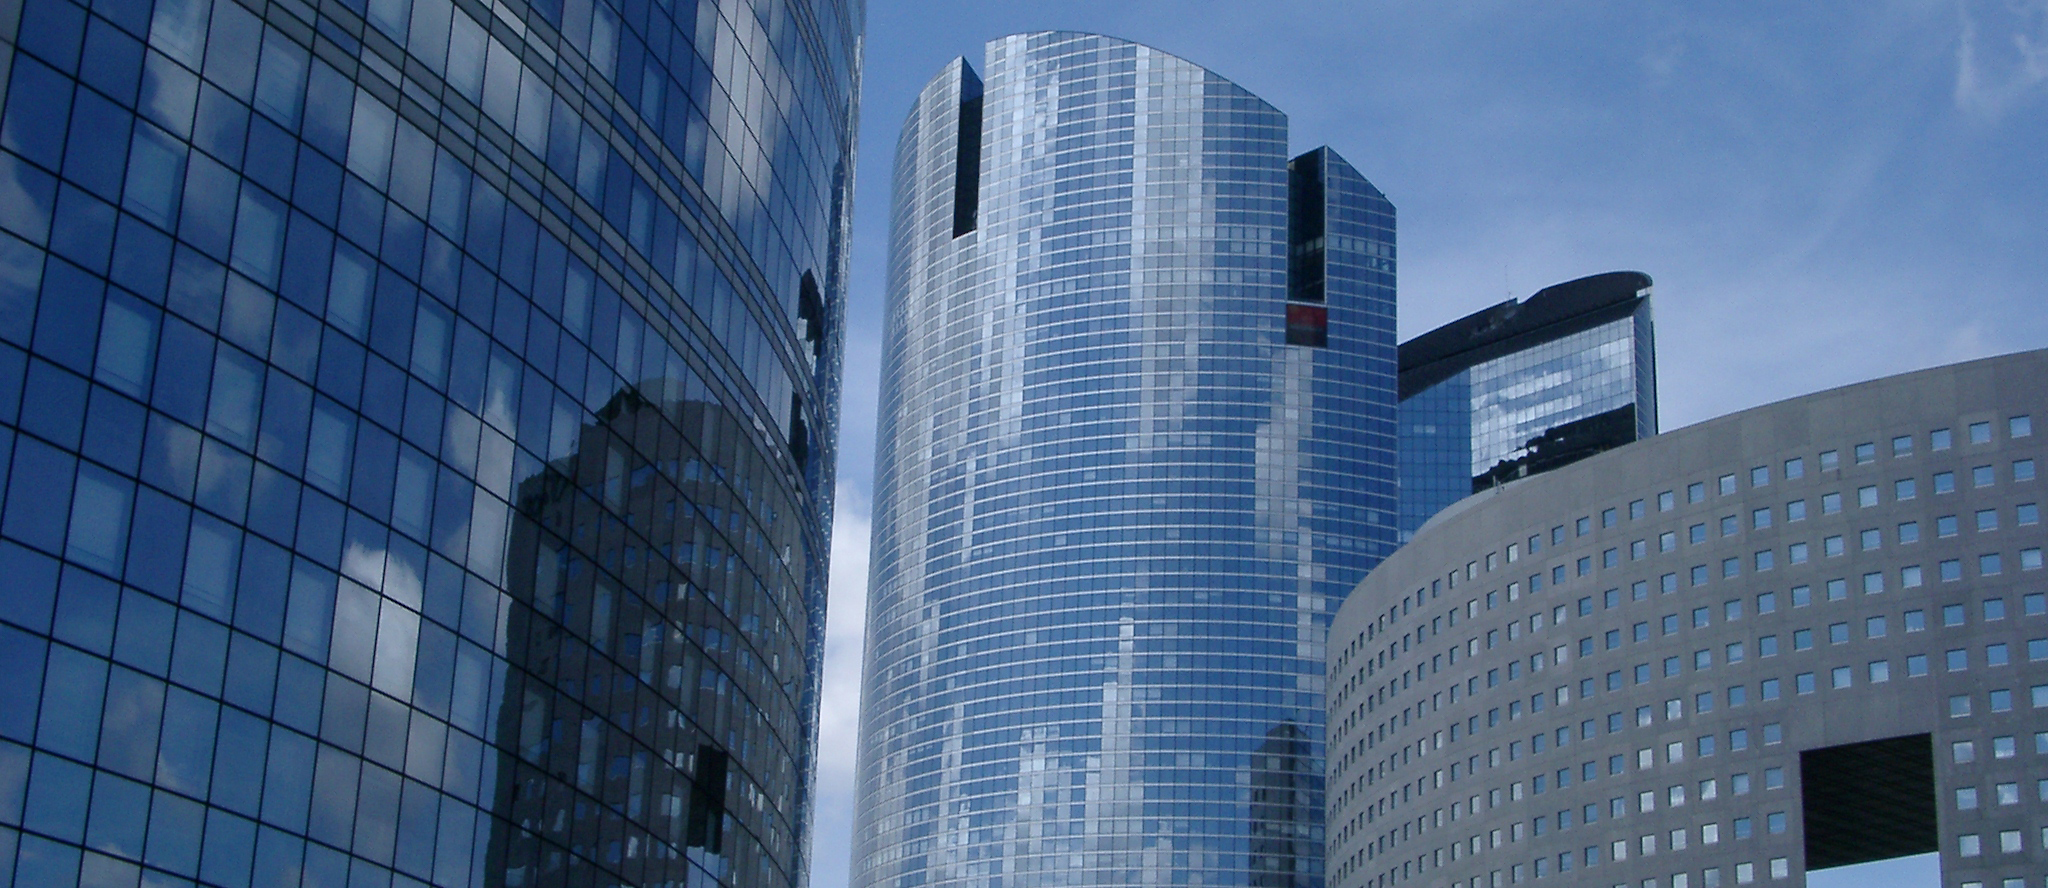 architecture-modern-glass-paris-glass-office-city-urban